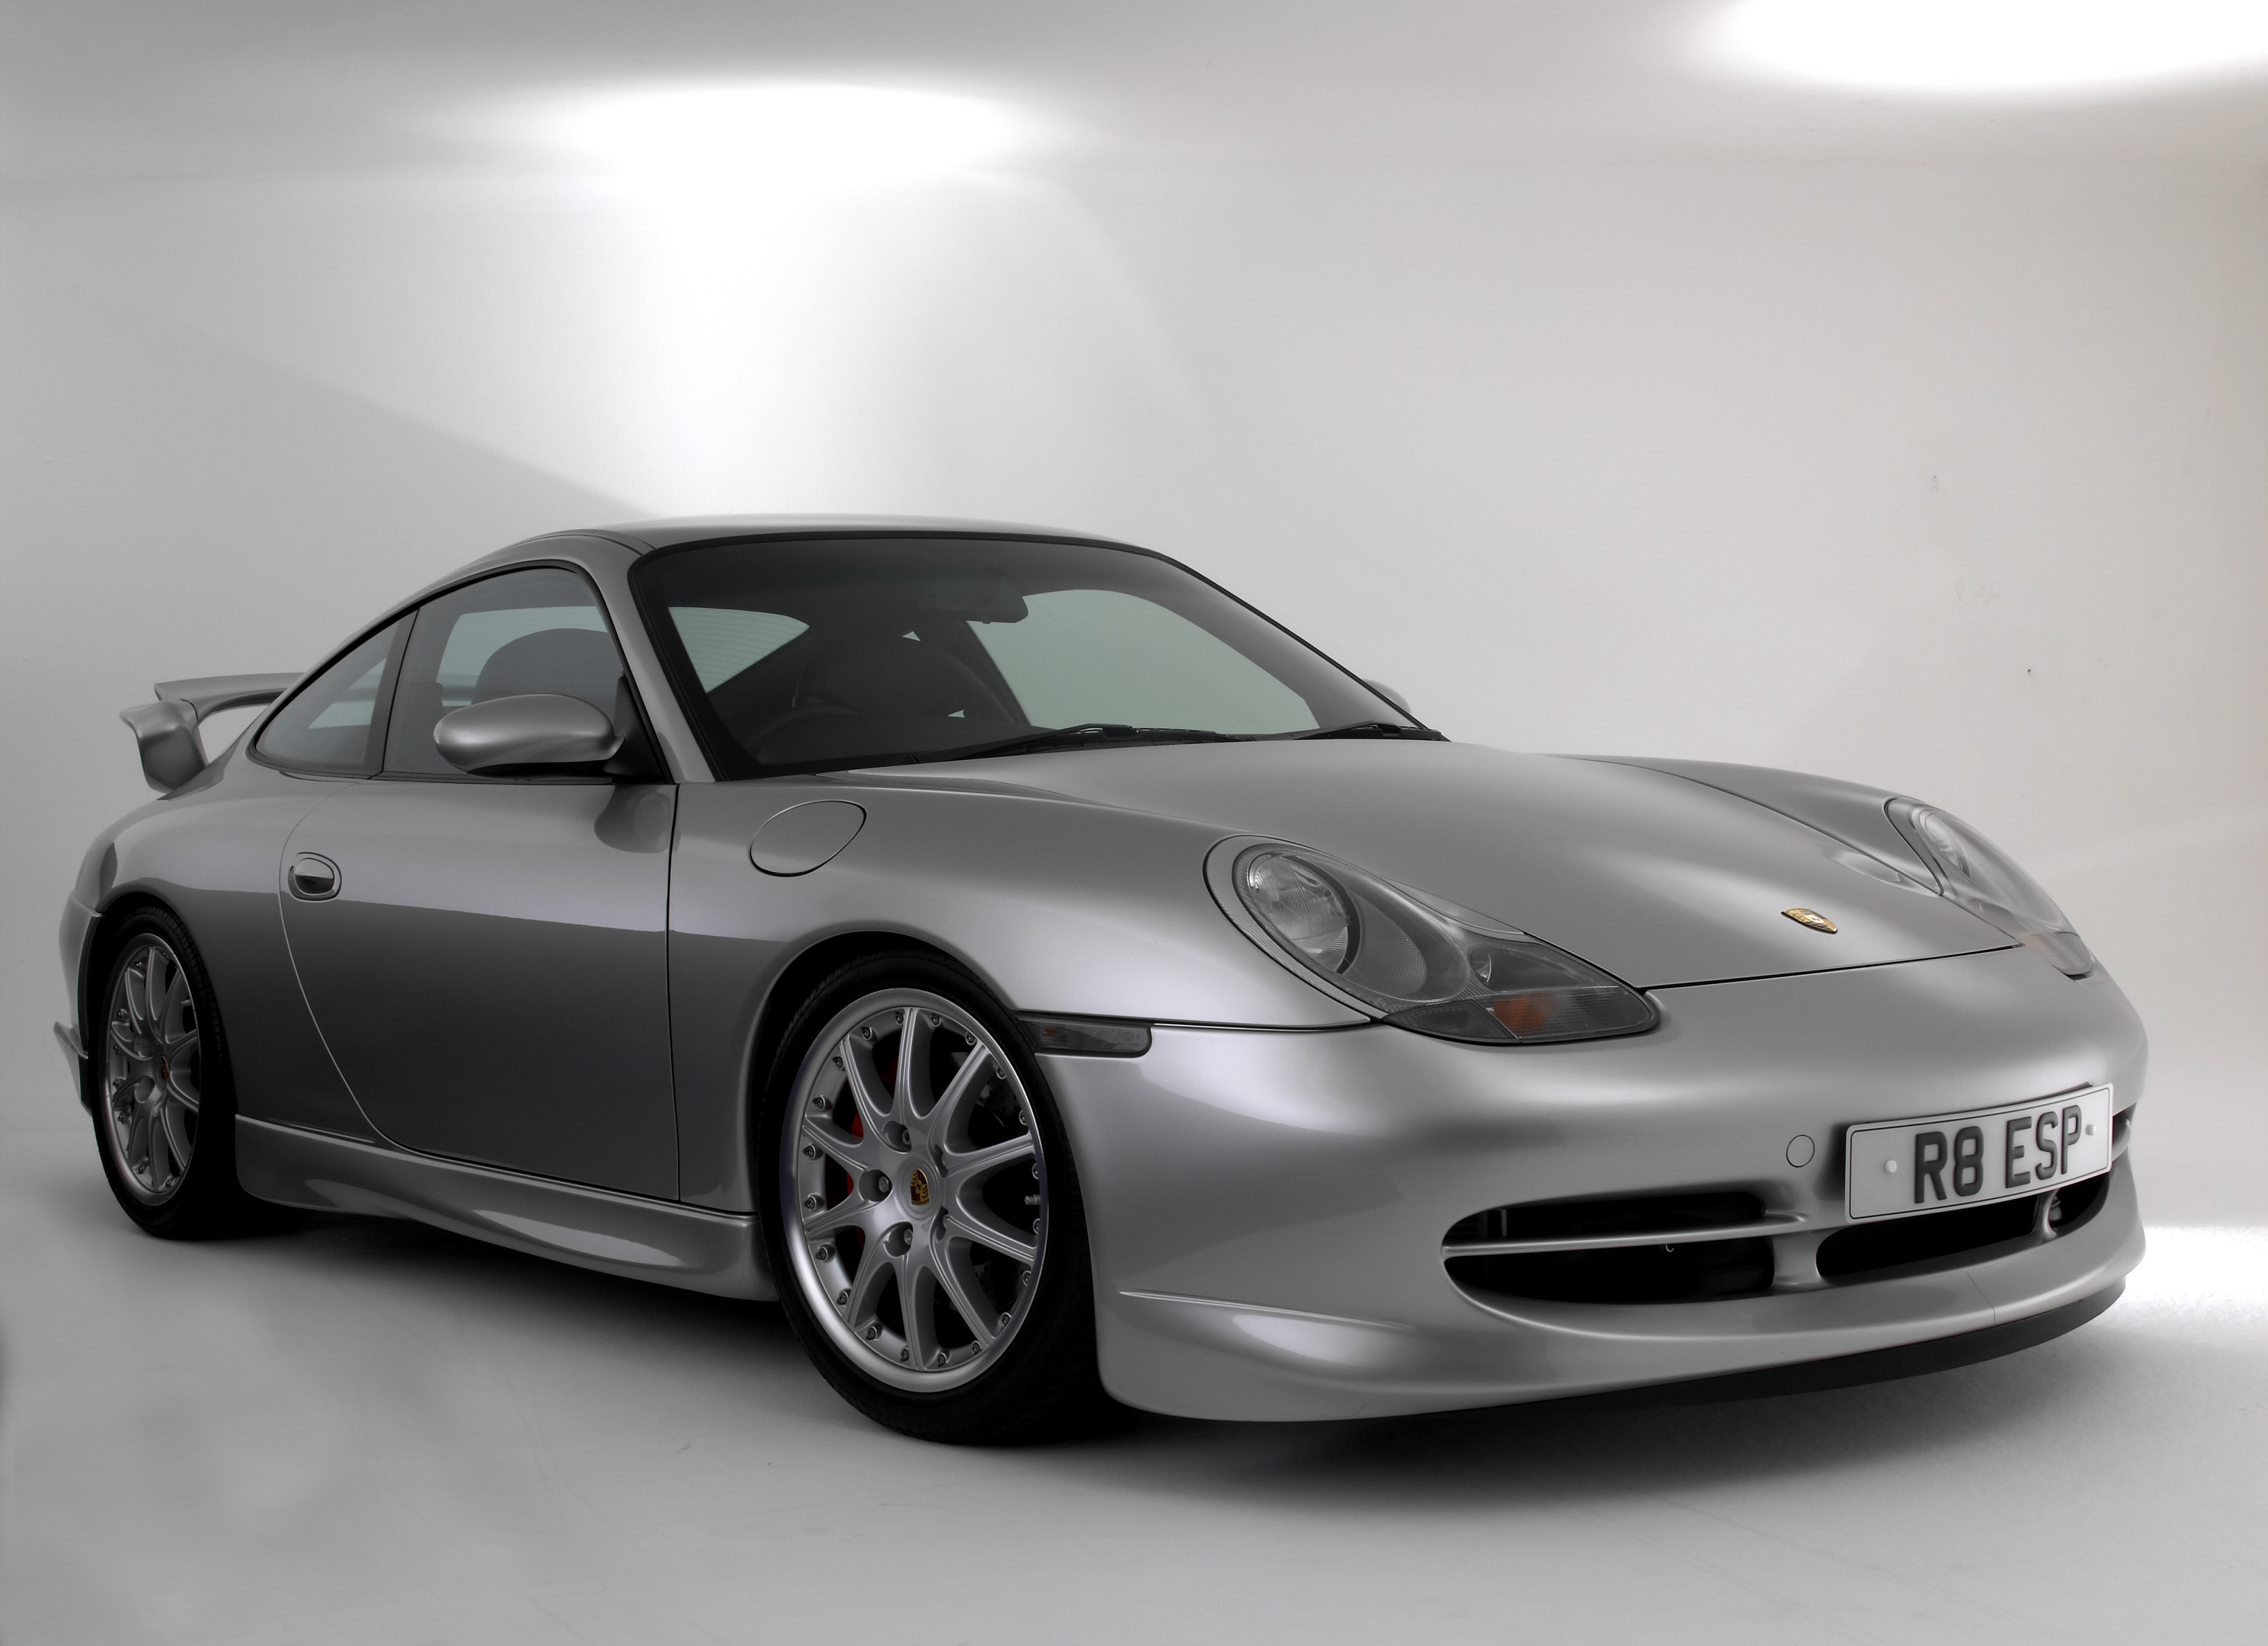 A silver 2000 996.1 Porsche 911 GT3 in a white studio